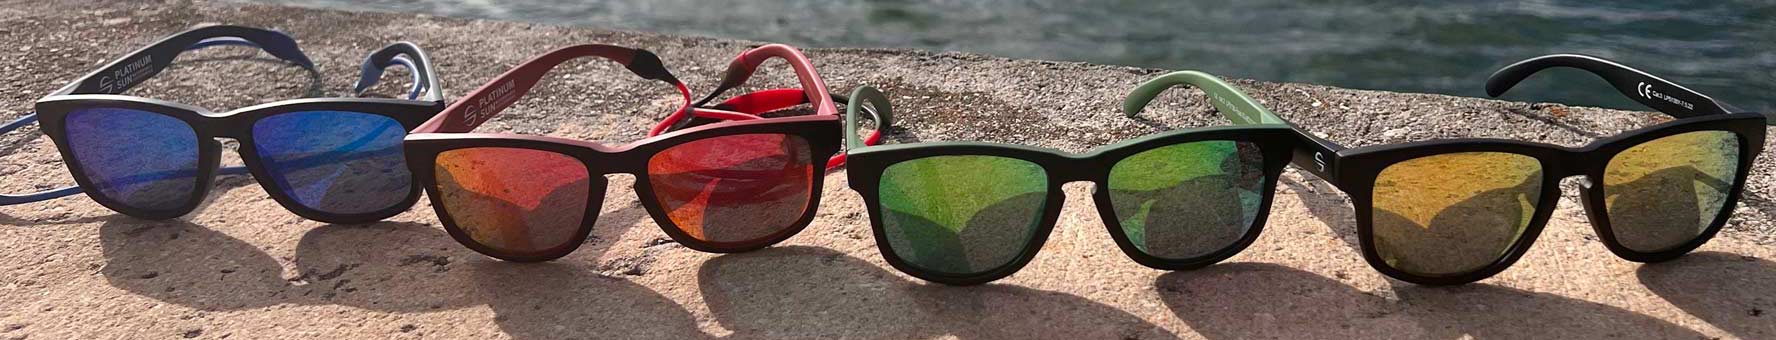 Floating Sunglasses - Sports Design